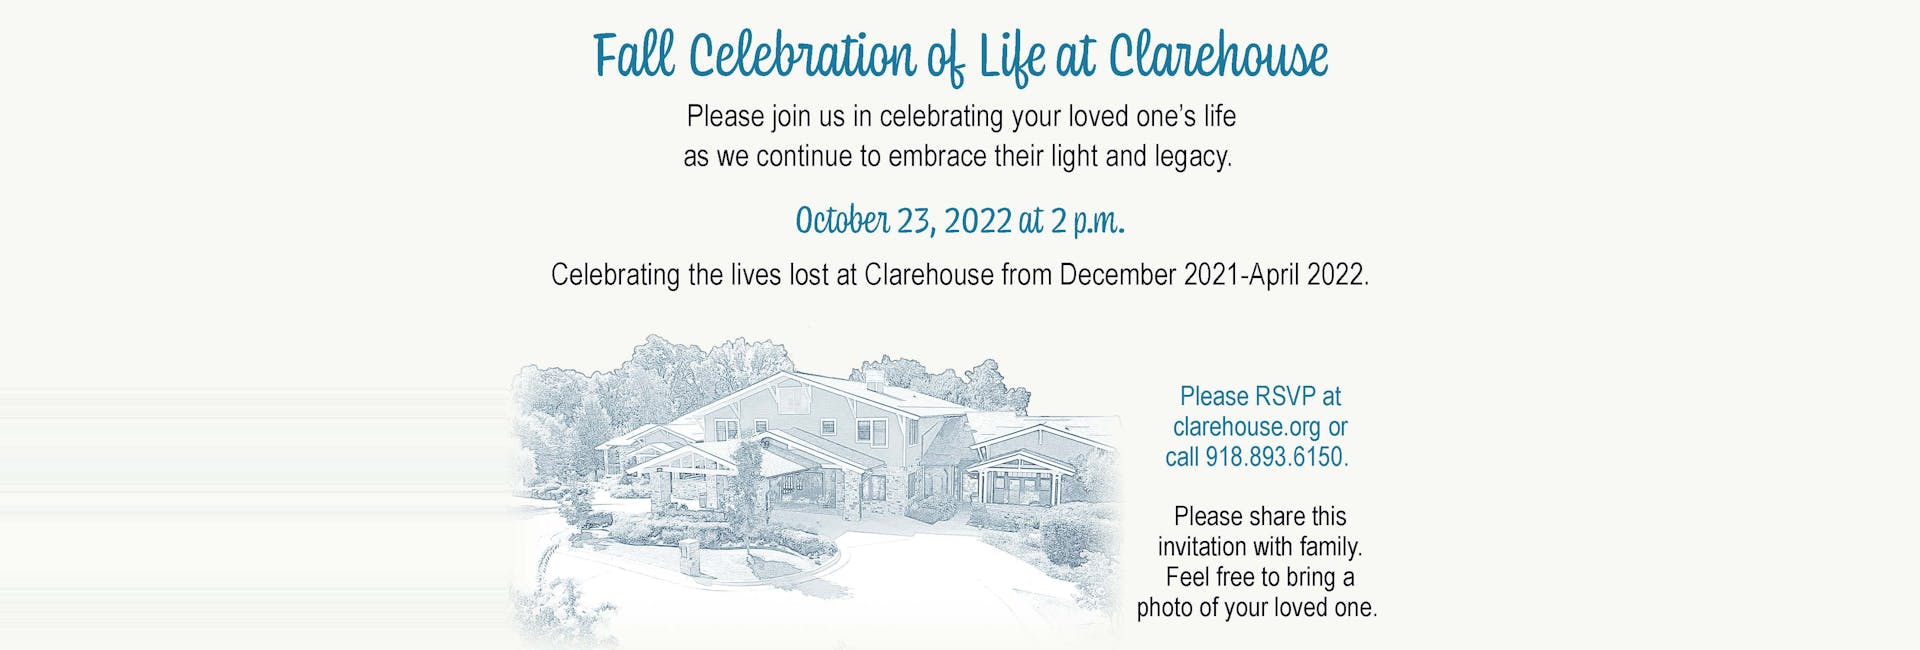 Fall Celebration of Life at Clarehouse